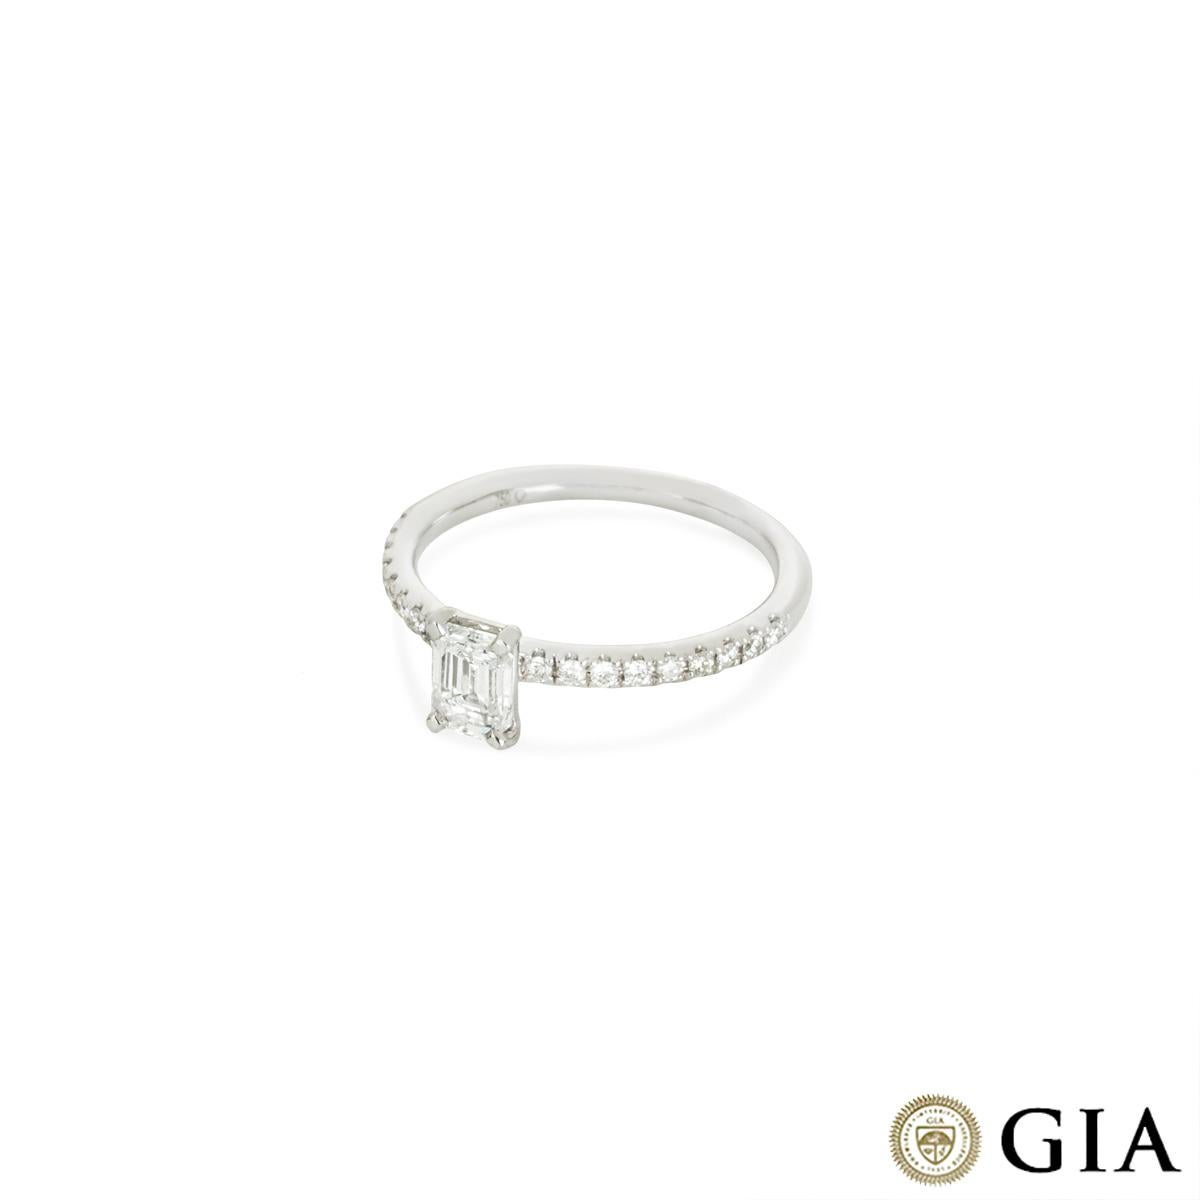 Women's Gia Certified White Gold Emerald Cut Diamond Ring 0.59 Carat D/VS1 For Sale